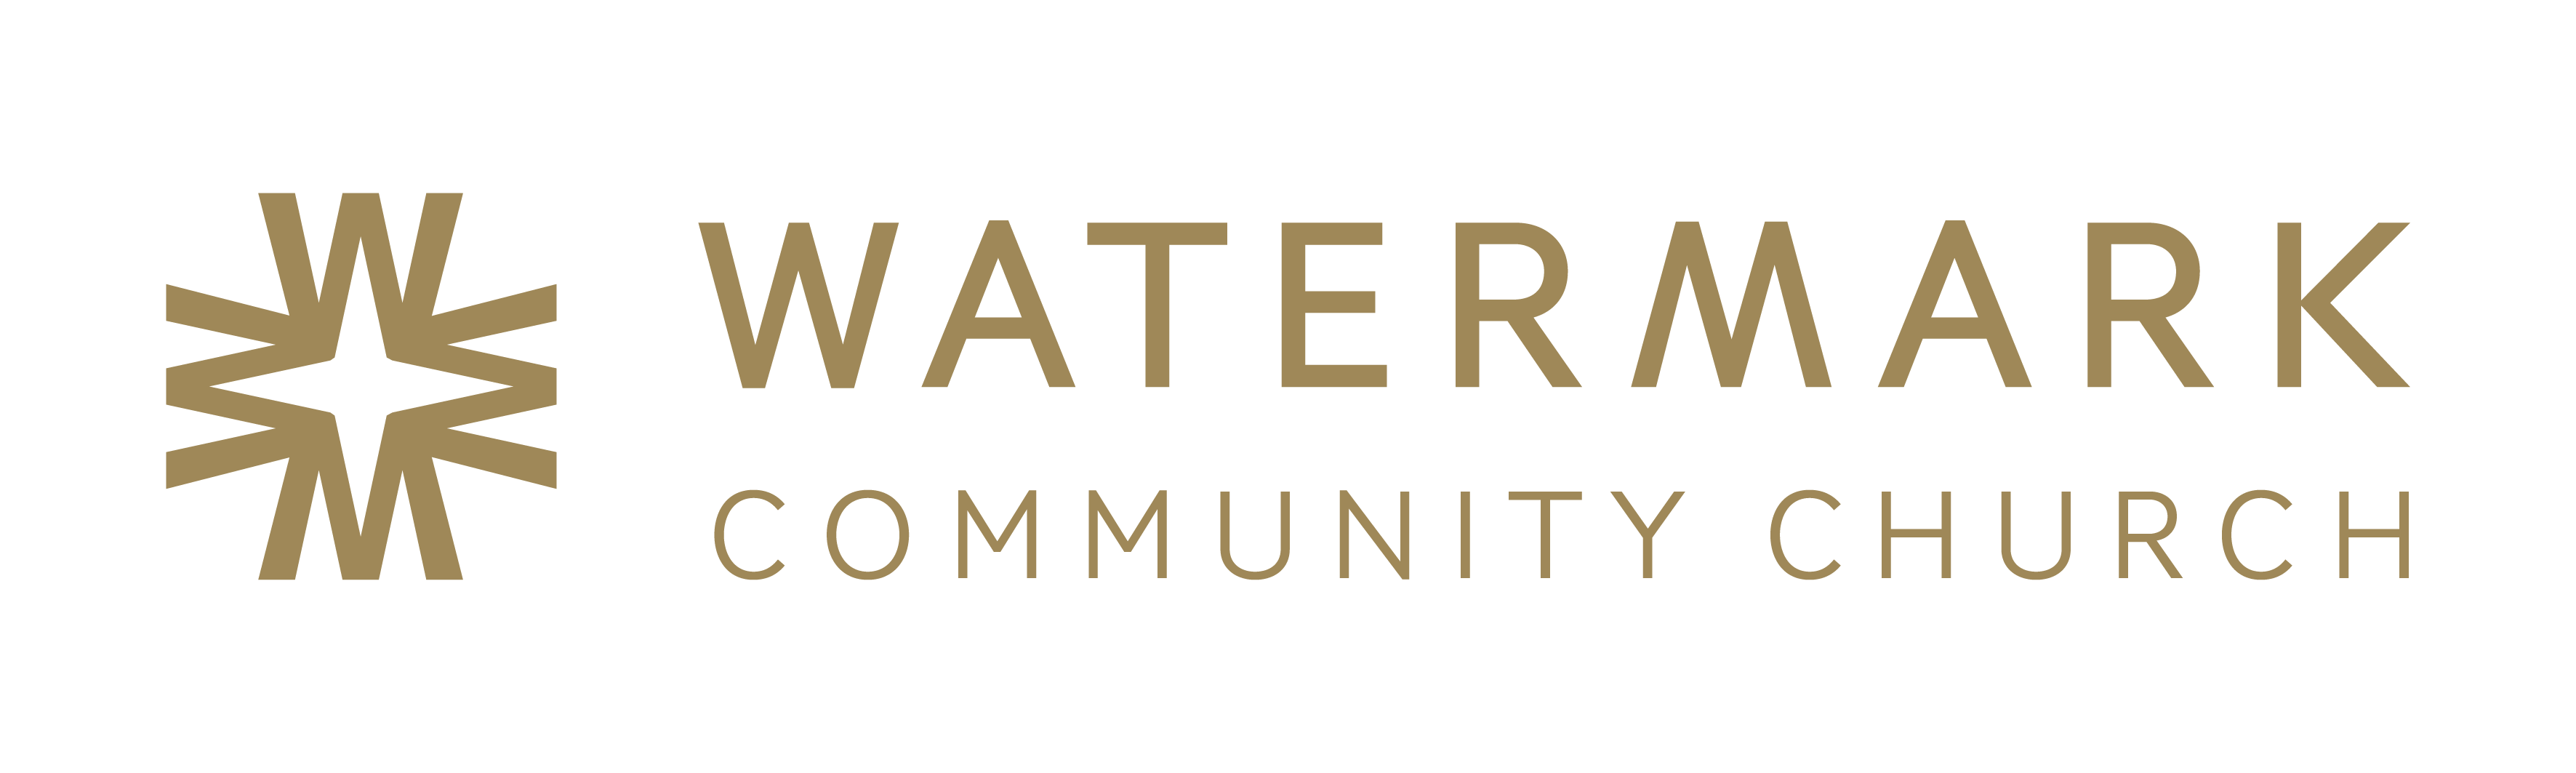 Watermark Community Church - Logo